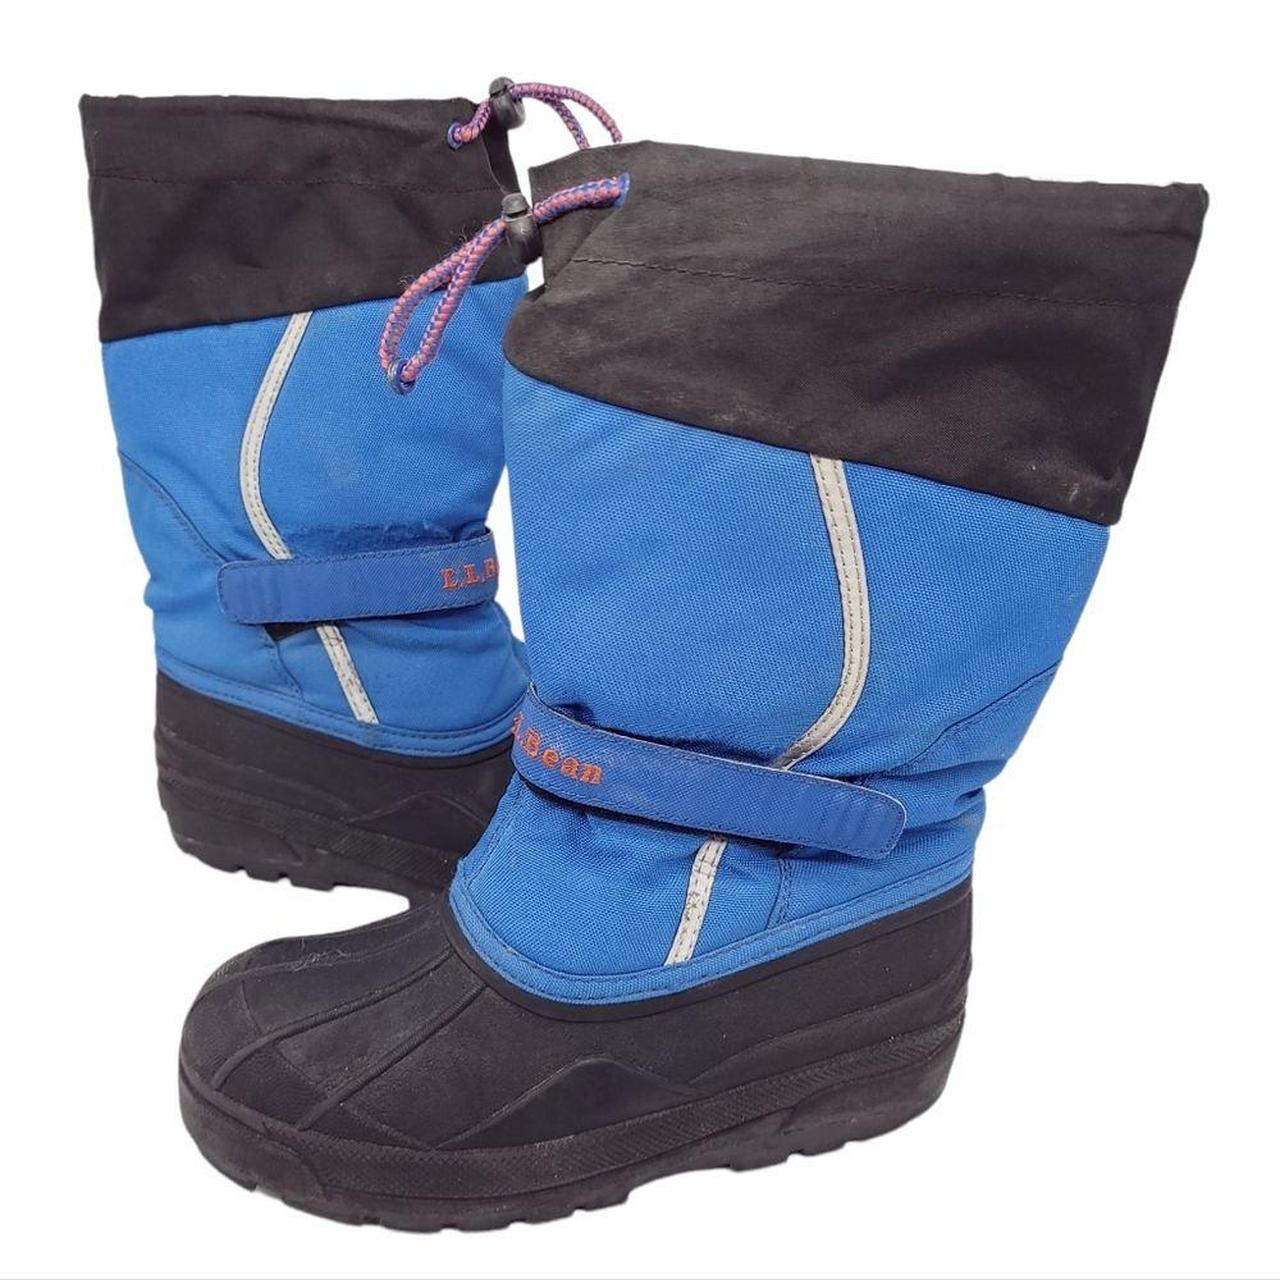 Ll Bean Kids Winter Boots Blue Black Shoes •Size... - Depop